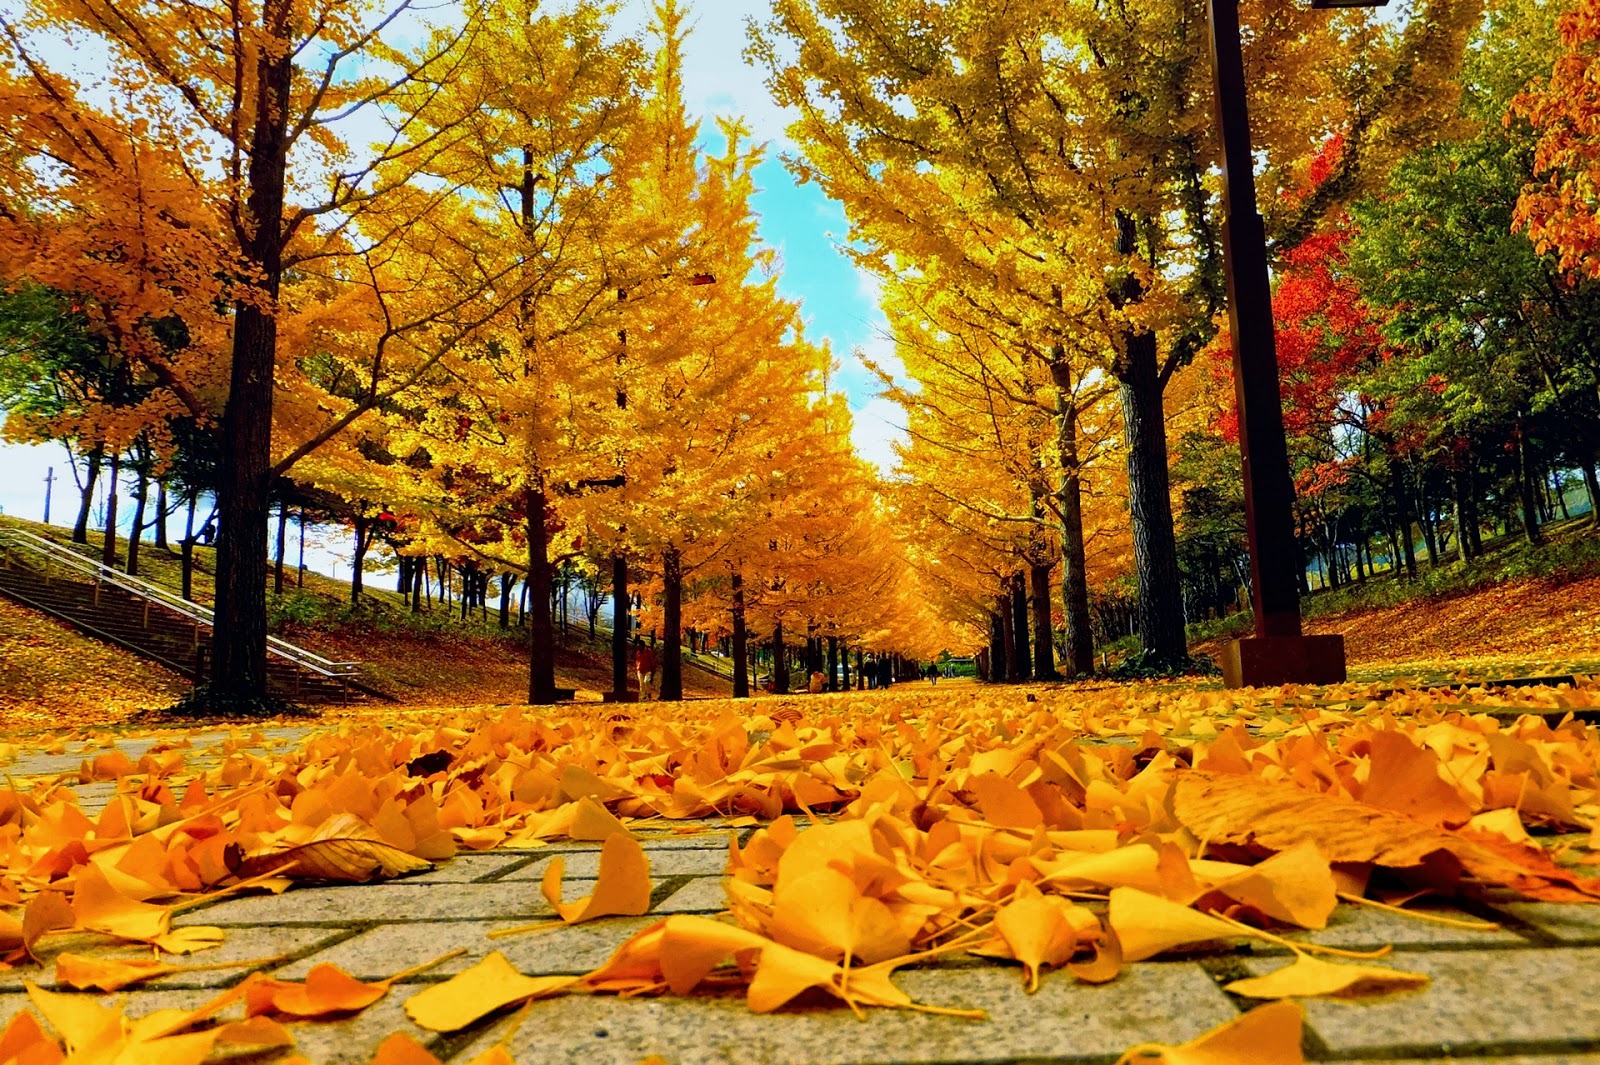 Hình Nền Mùa Thu Đẹp Cho Điện Thoại wallpaperhdfree Autumn leaves wallpaper Cute fall backgrounds Leaves wallpaper iphone